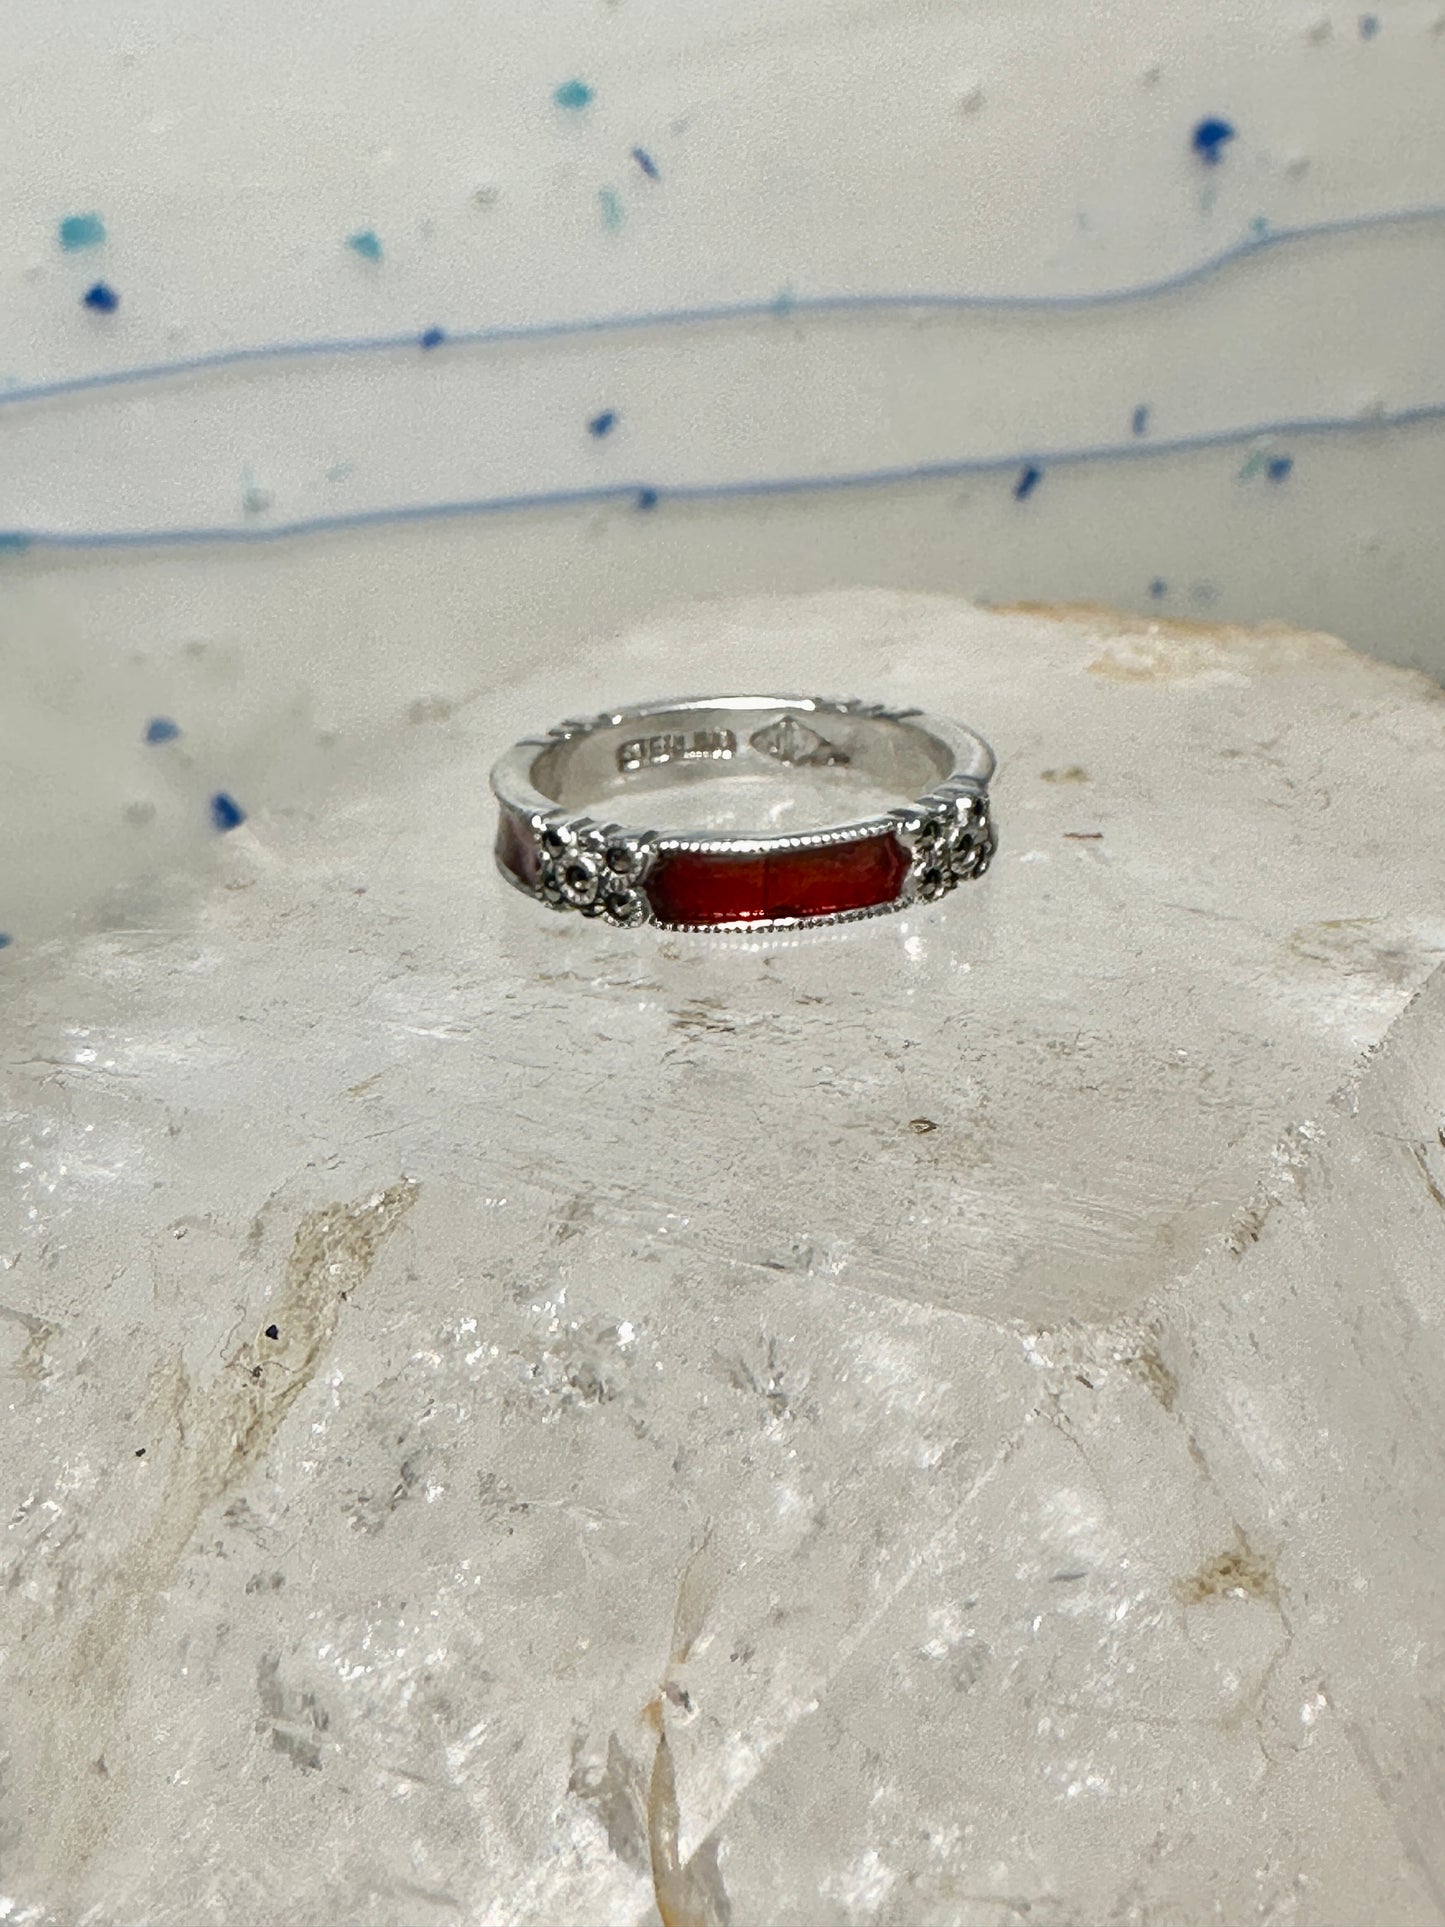 Judith Jack ring Wedding red enamel band marcasites stacker size 7.75 sterling silver women